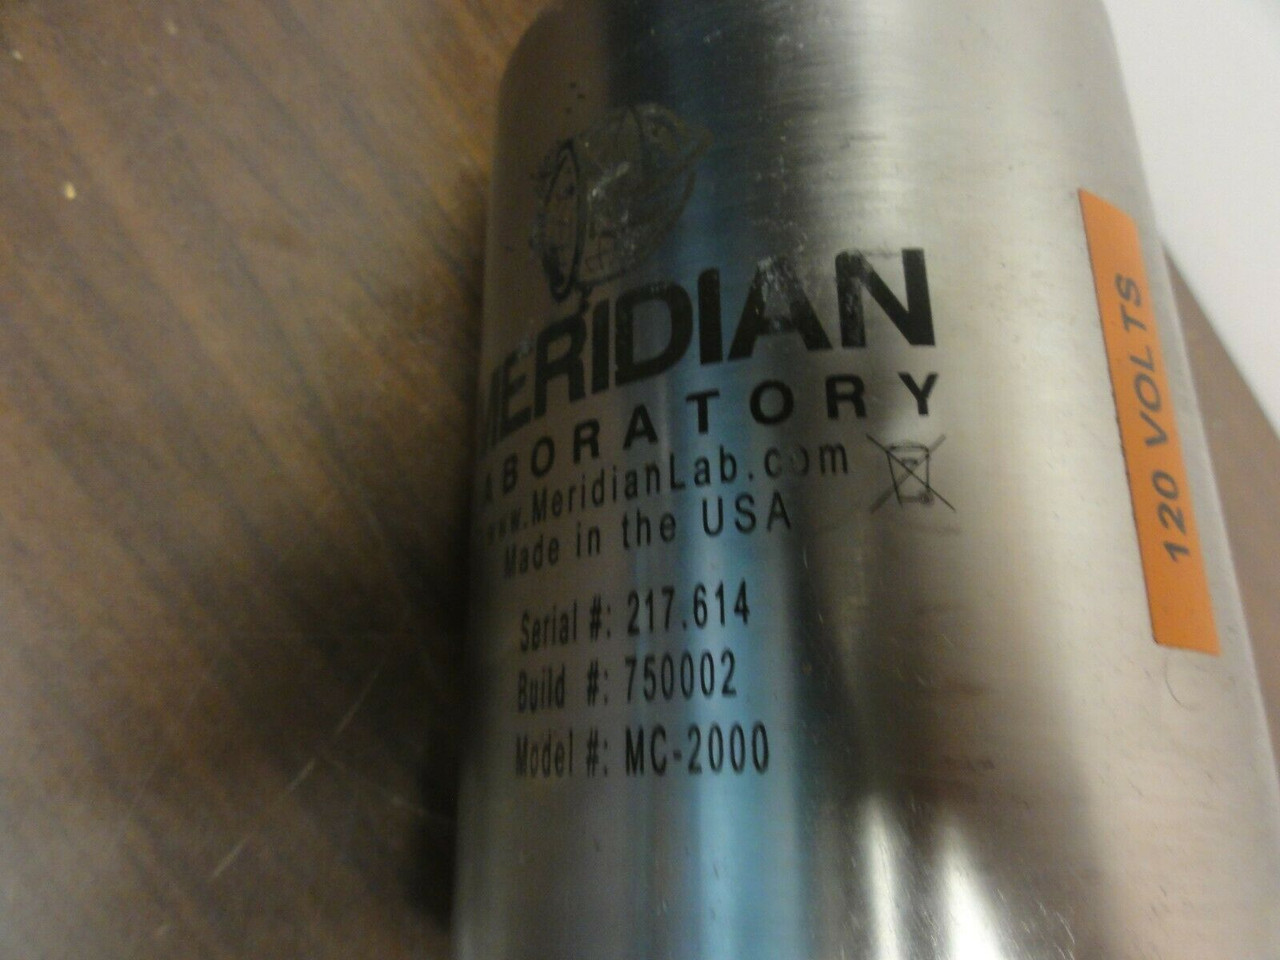 Meridian MC-2000 2000 Amp Single Contact Rotary Ground - Slip Ring, S/N 217.614